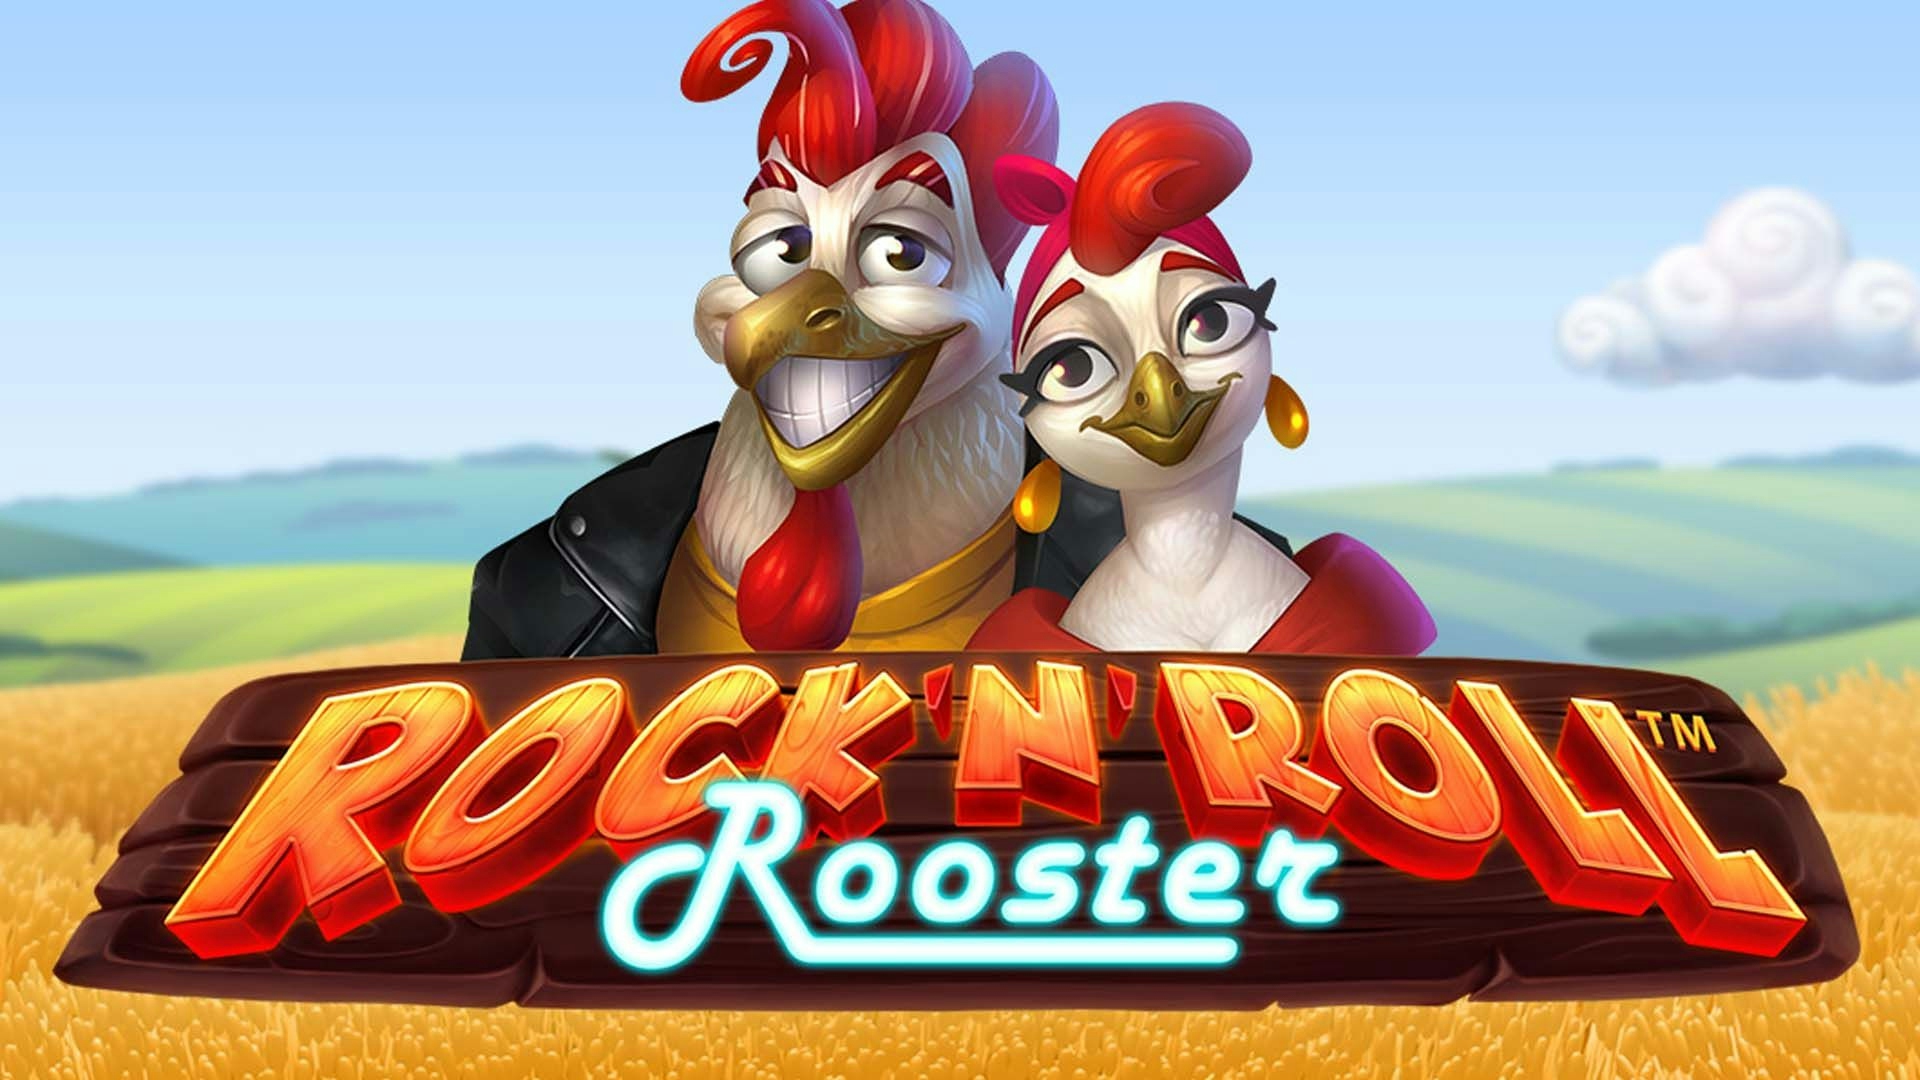 Rock 'N' Roll Rooster